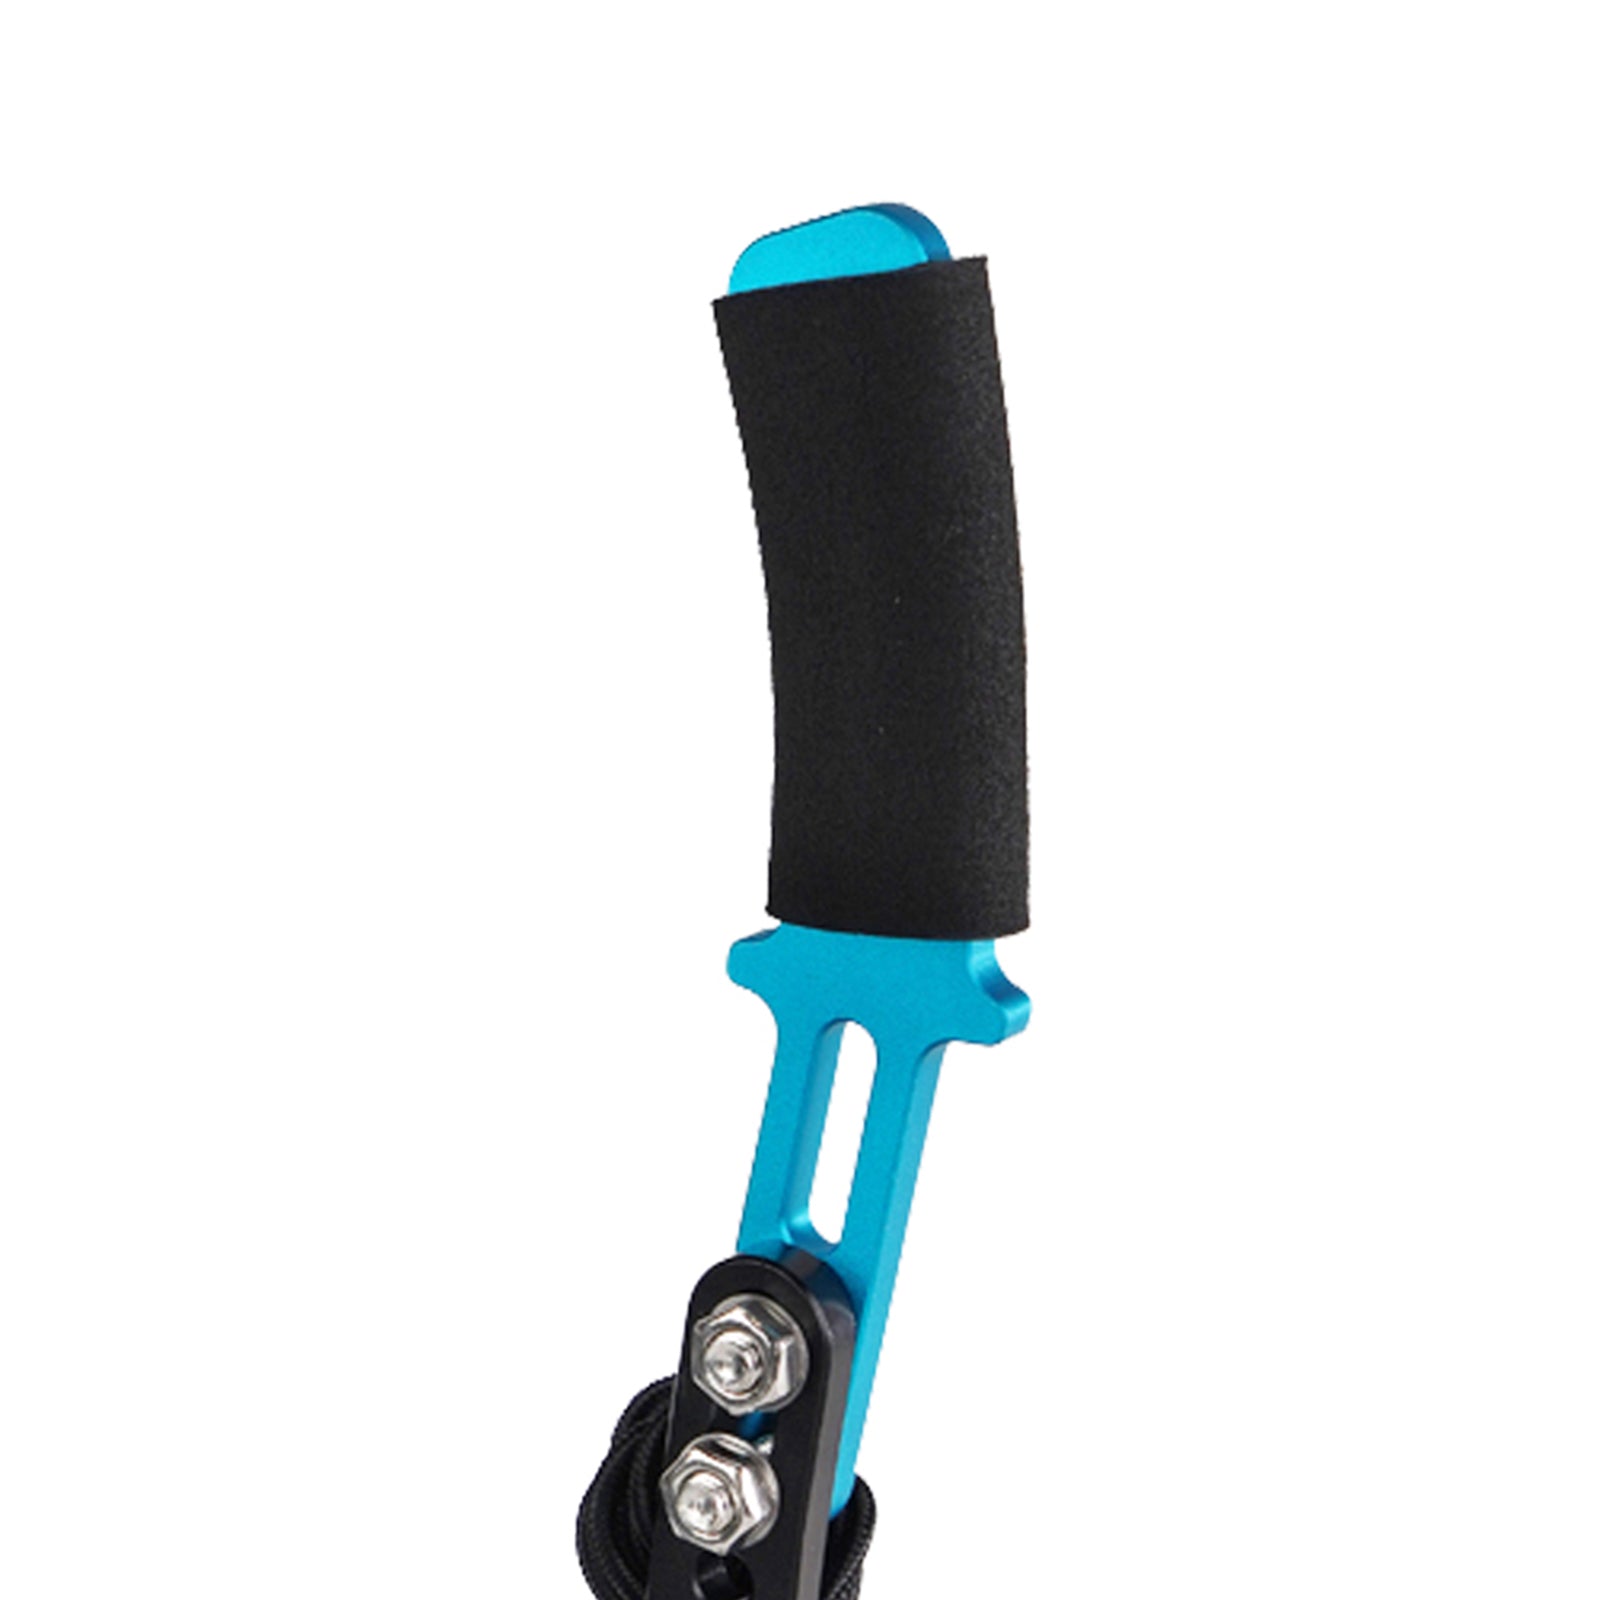 USB3.0 14Bit PS4/PS5 SIM Handbrake for Racing Games Steering Wheel Stand G29